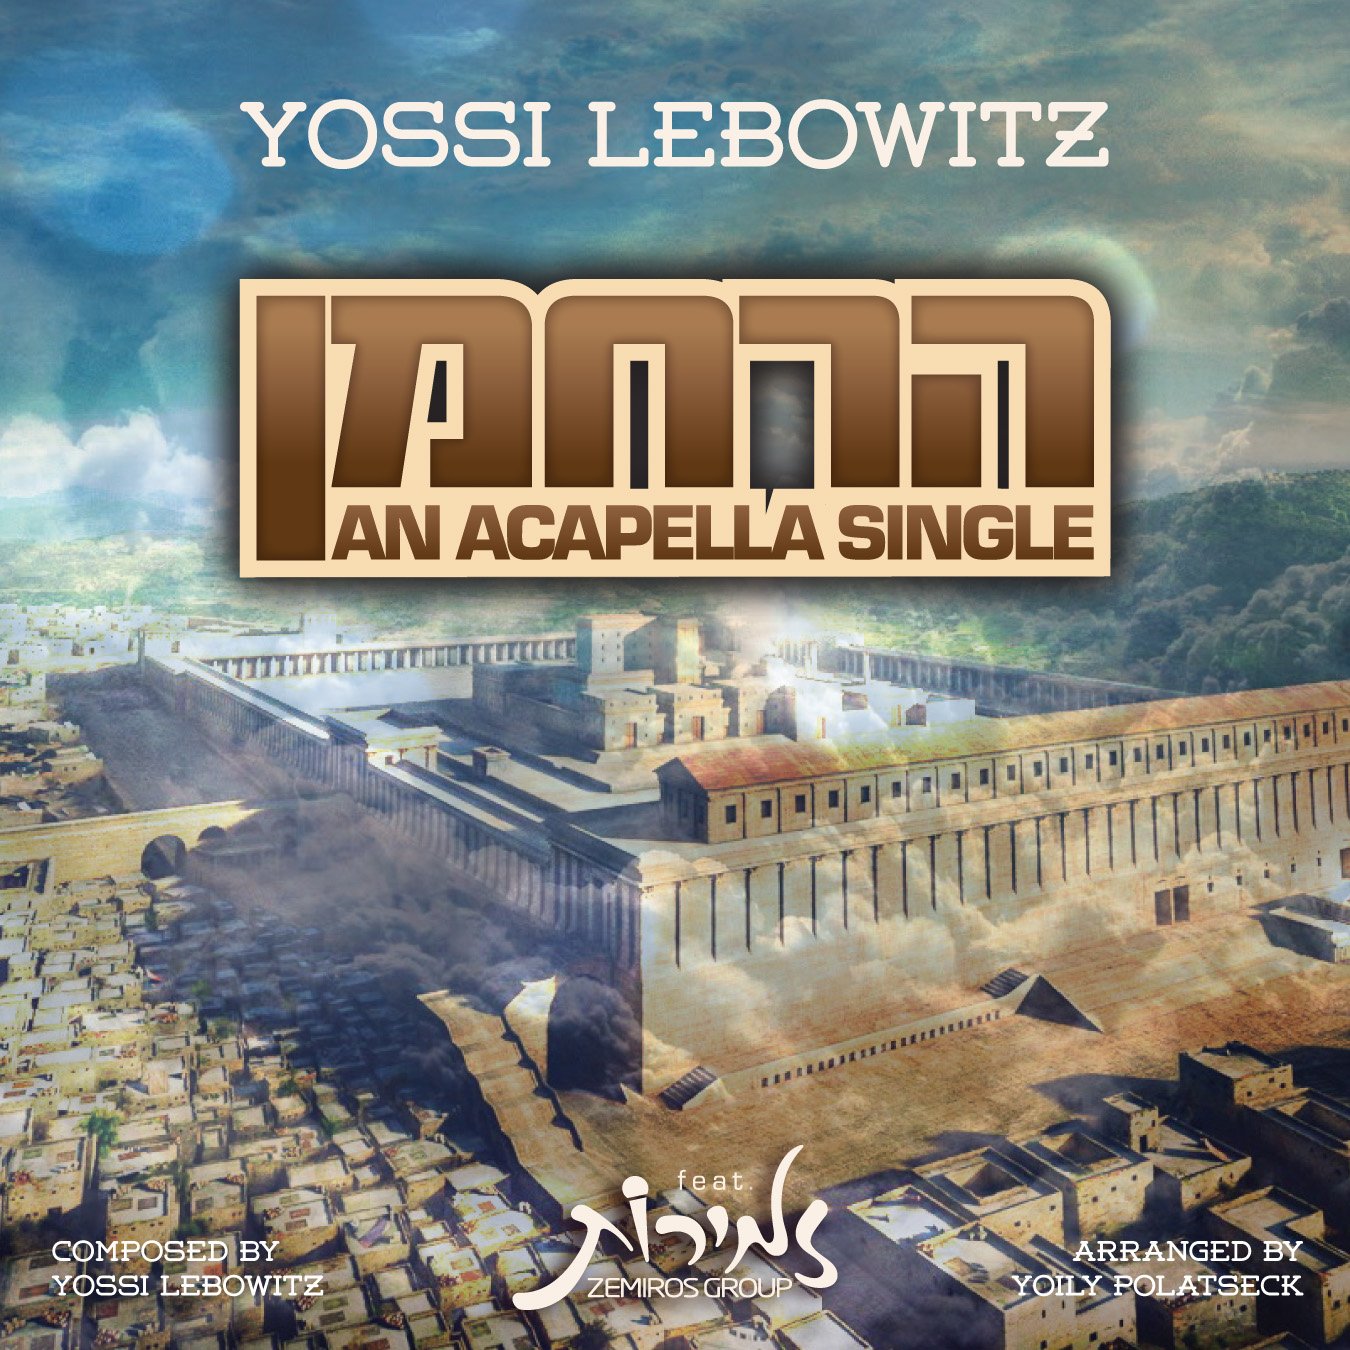 Yossi Lebowitz - Horachamon (Acapella) feat. Zemiros Group